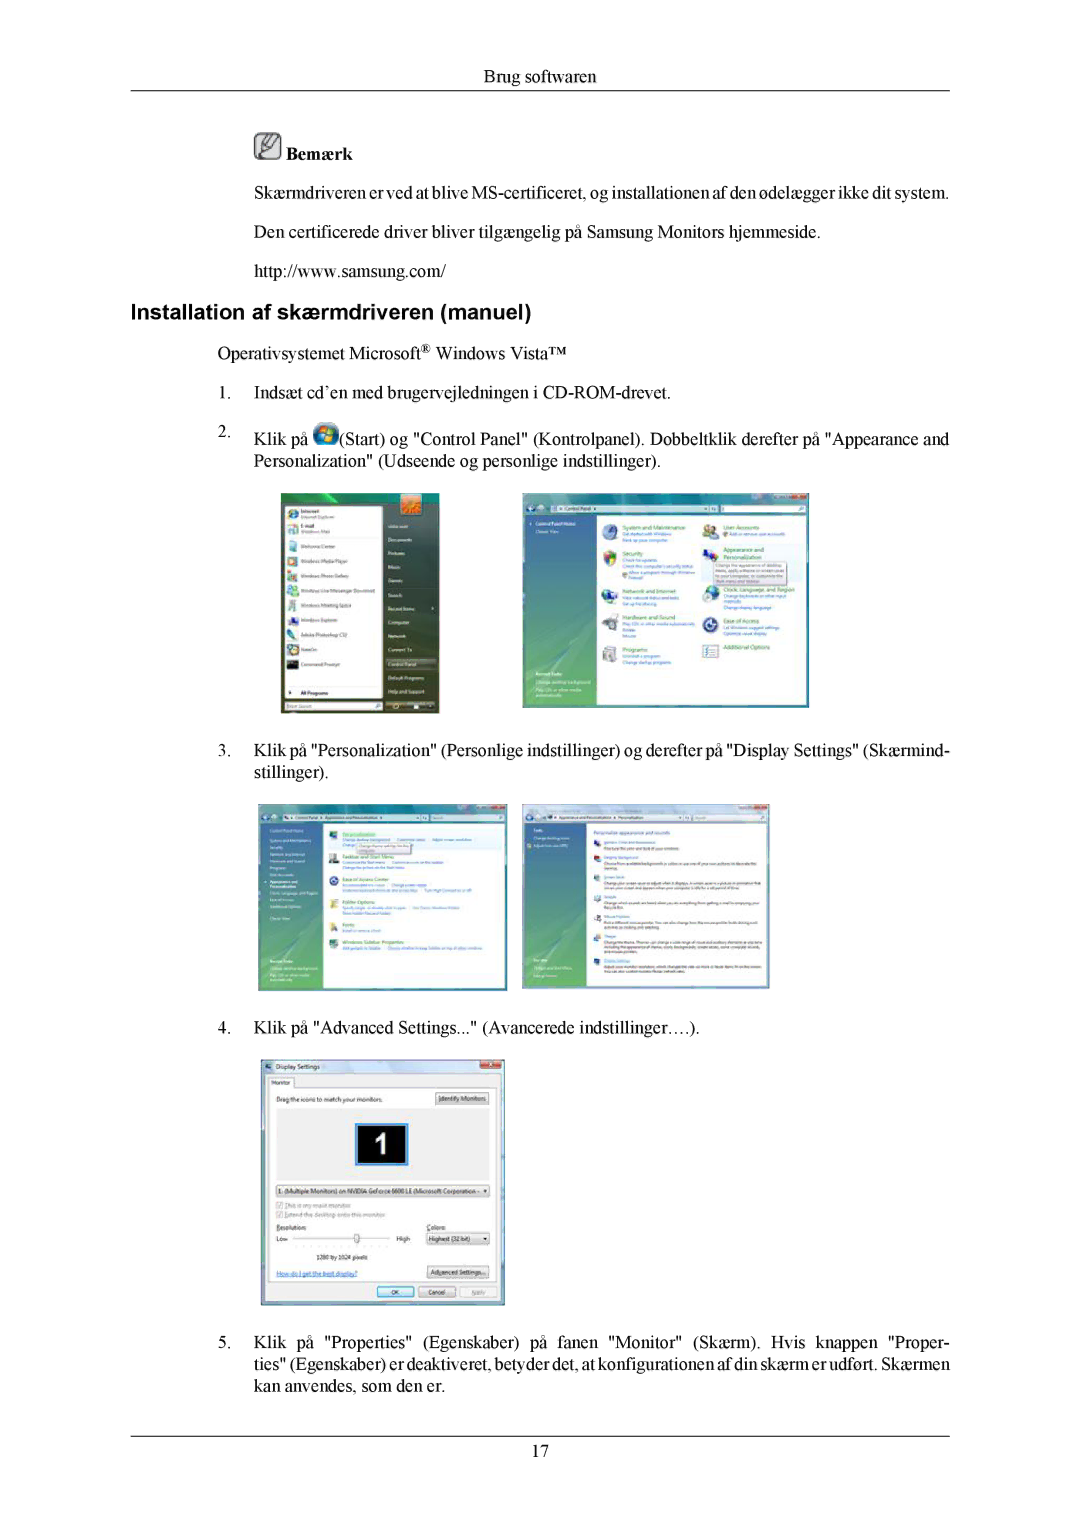 Samsung LS19MYKESQ/EDC, LS19MYKESCA/EN manual Installation af skærmdriveren manuel 